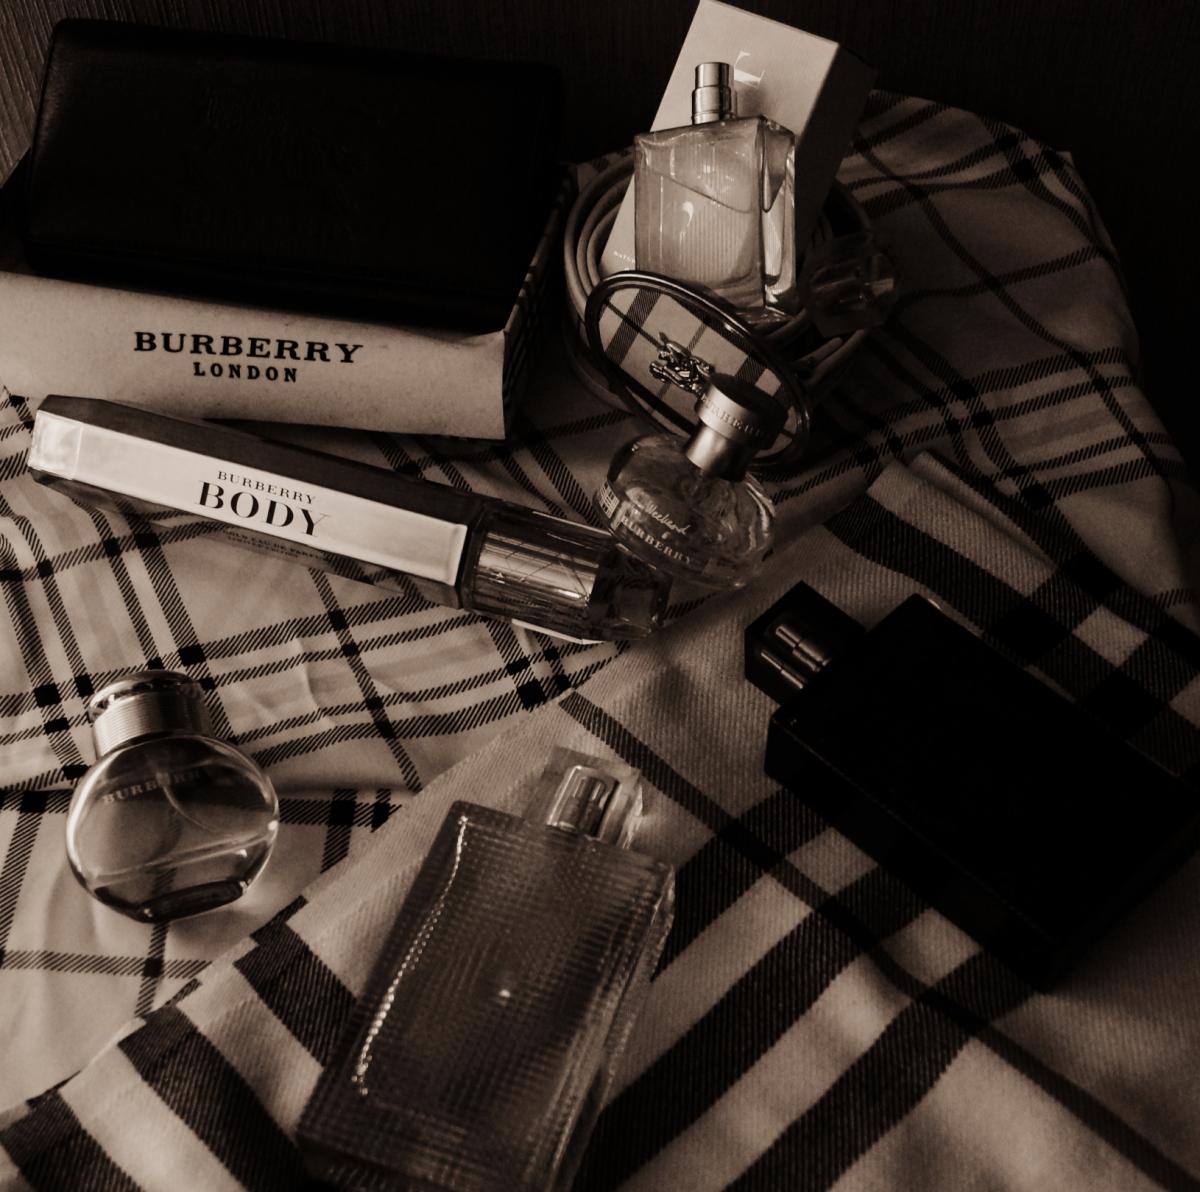 Burberry Brit Rhythm Burberry cologne - a fragrance for men 2013